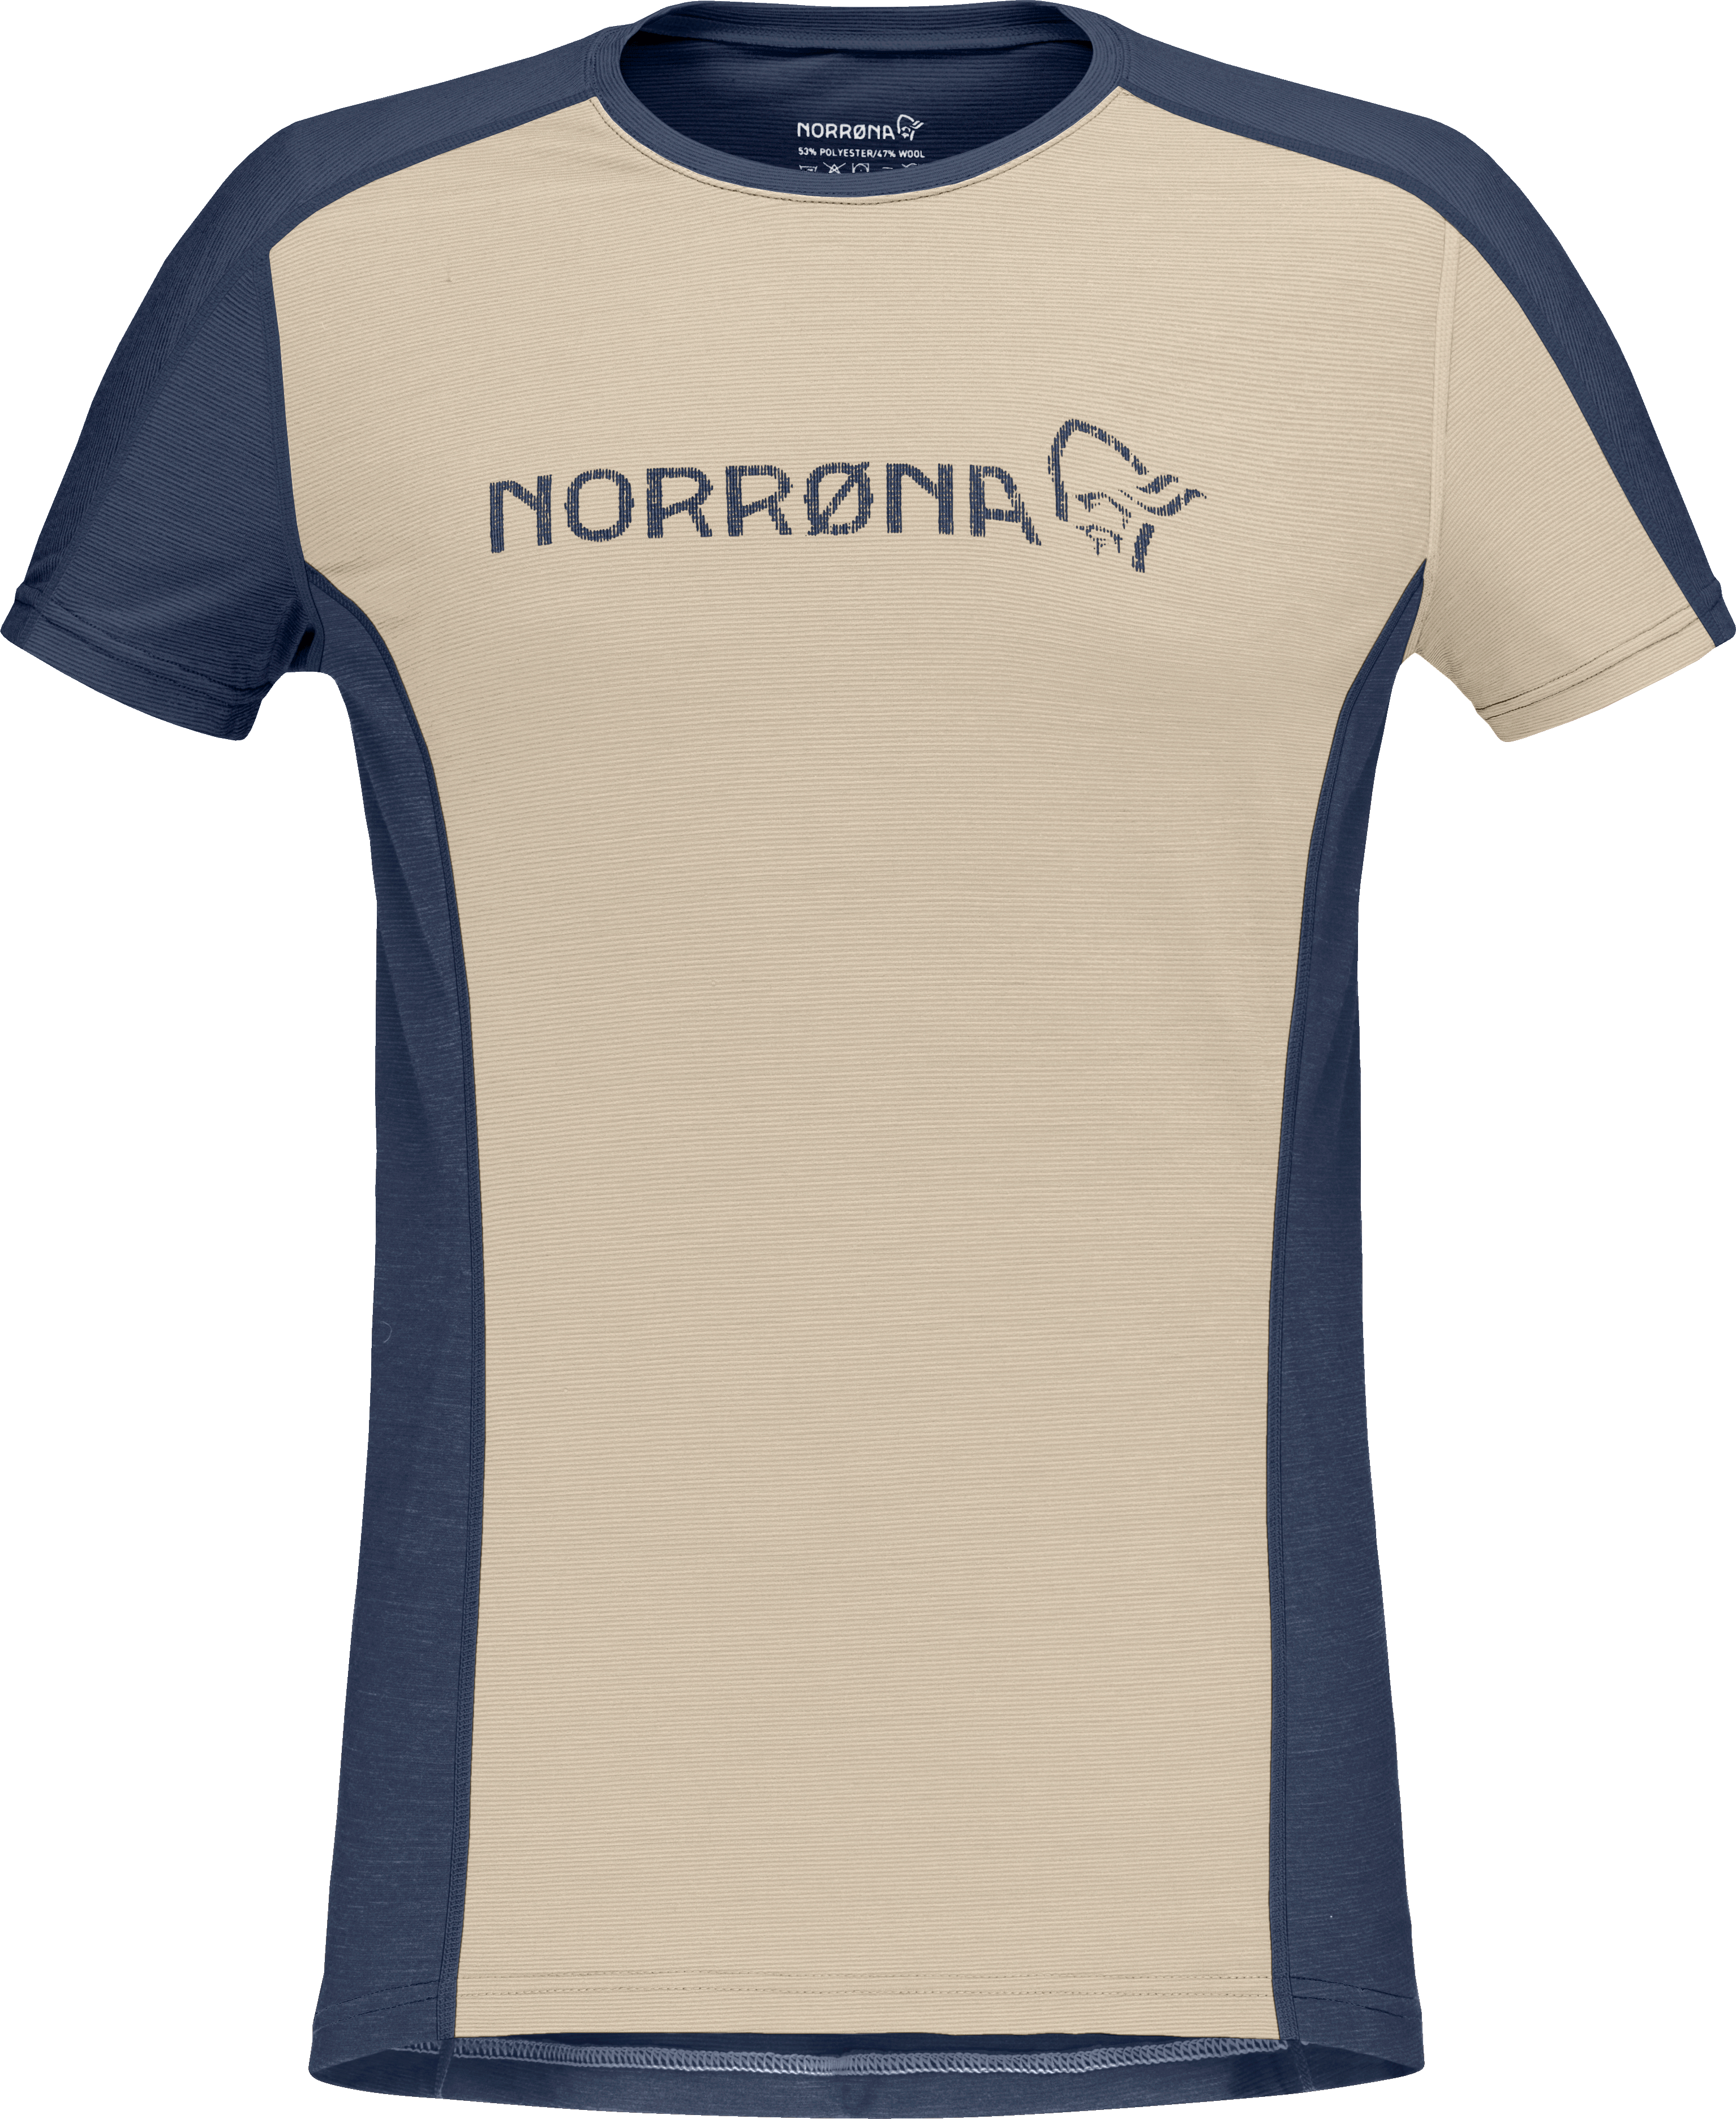 Norrøna Norrøna Women's Falketind Equaliser Merino T-Shirt Pure Cashmere XS, Pure Cashmere